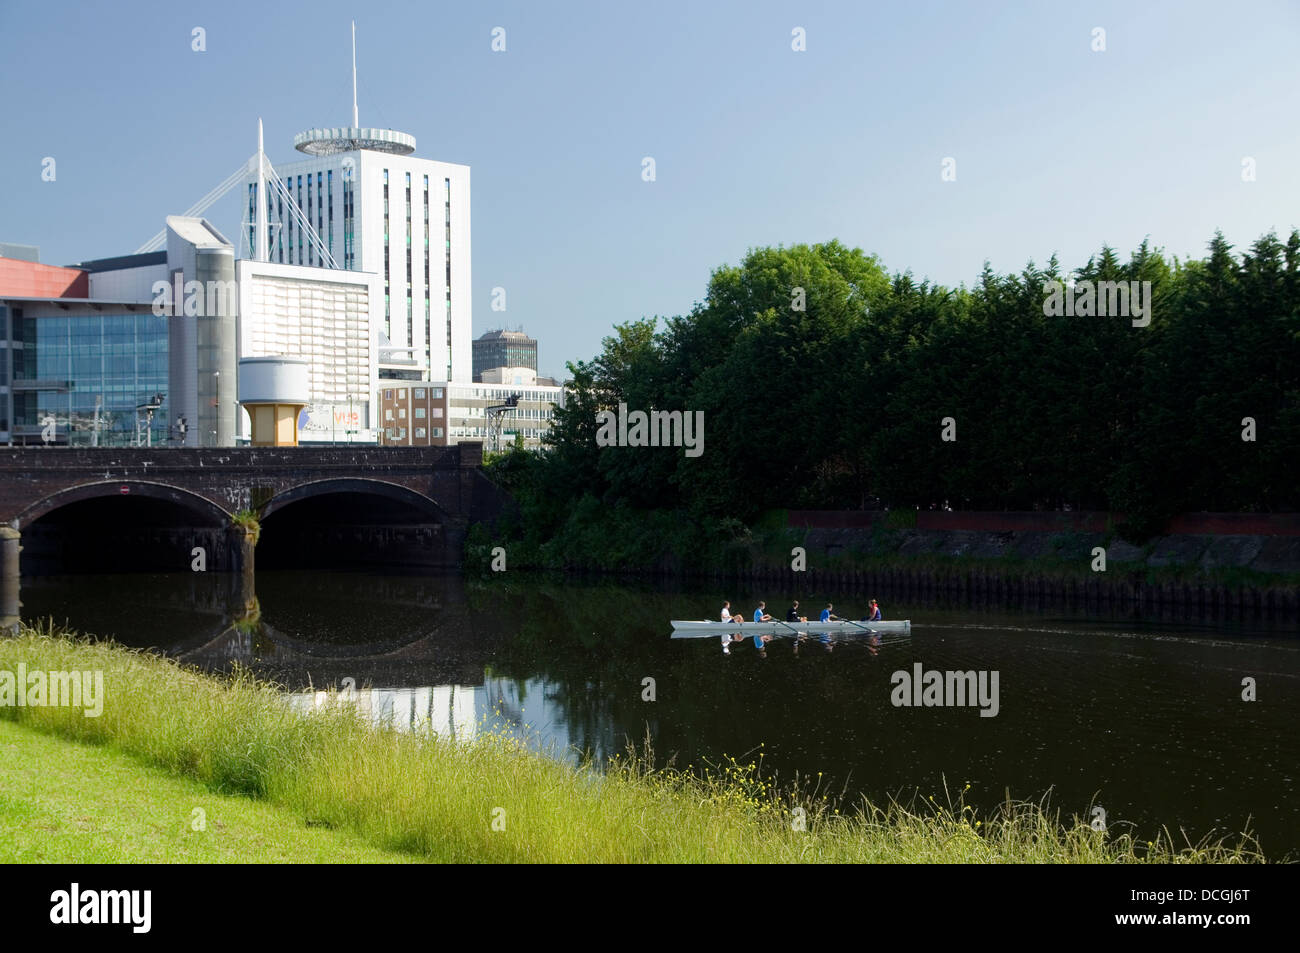 Rudern, Boot und Besatzung am Fluss Taff, Cardiff, Wales, UK. Stockfoto